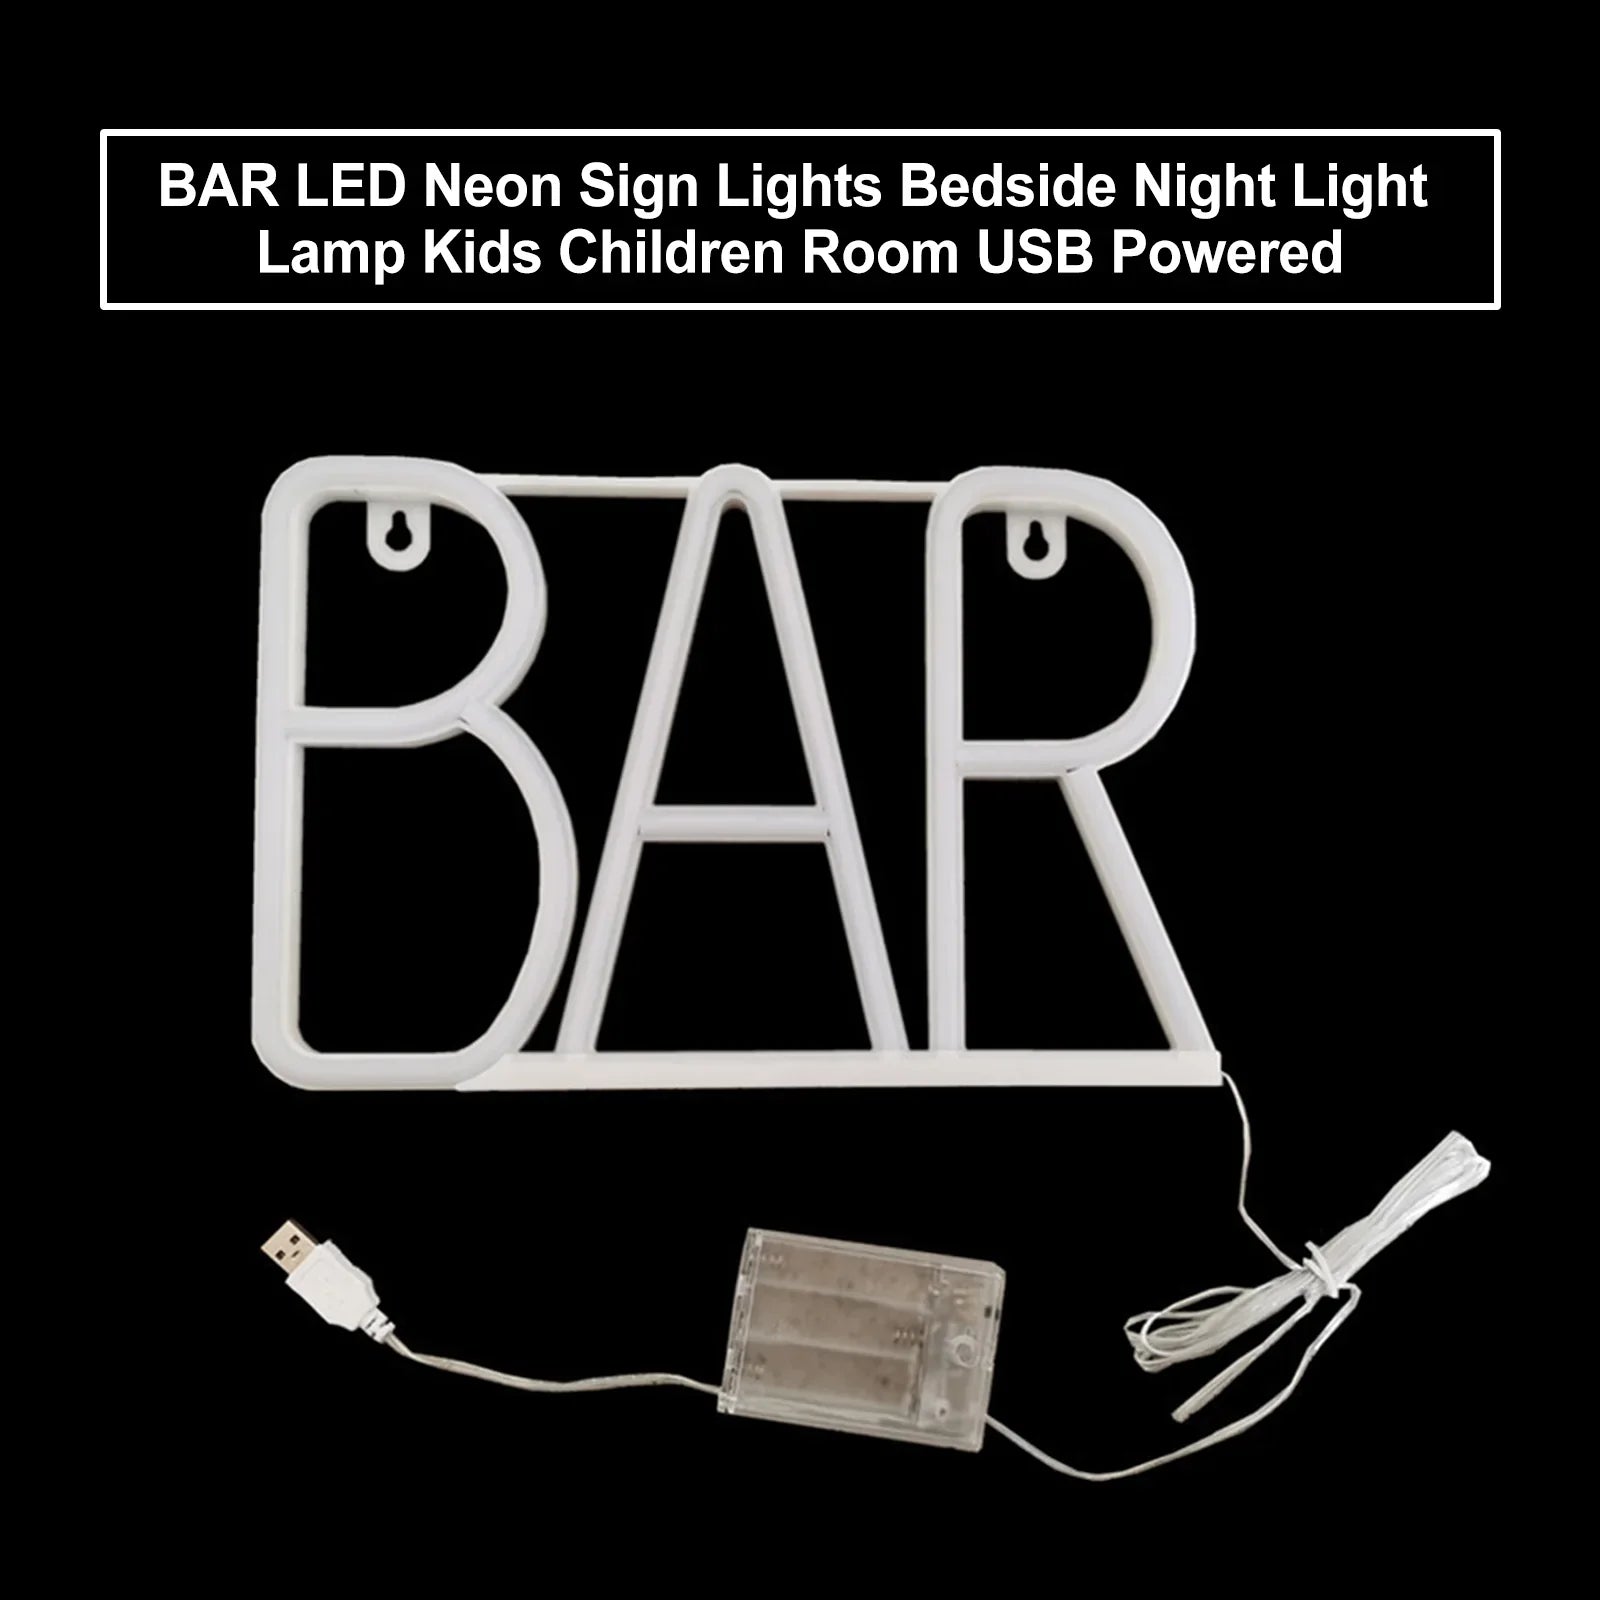 BAR LED Letrero de neón Luces de noche Lámpara de luz nocturna Niños Habitación para niños Alimentado por USB